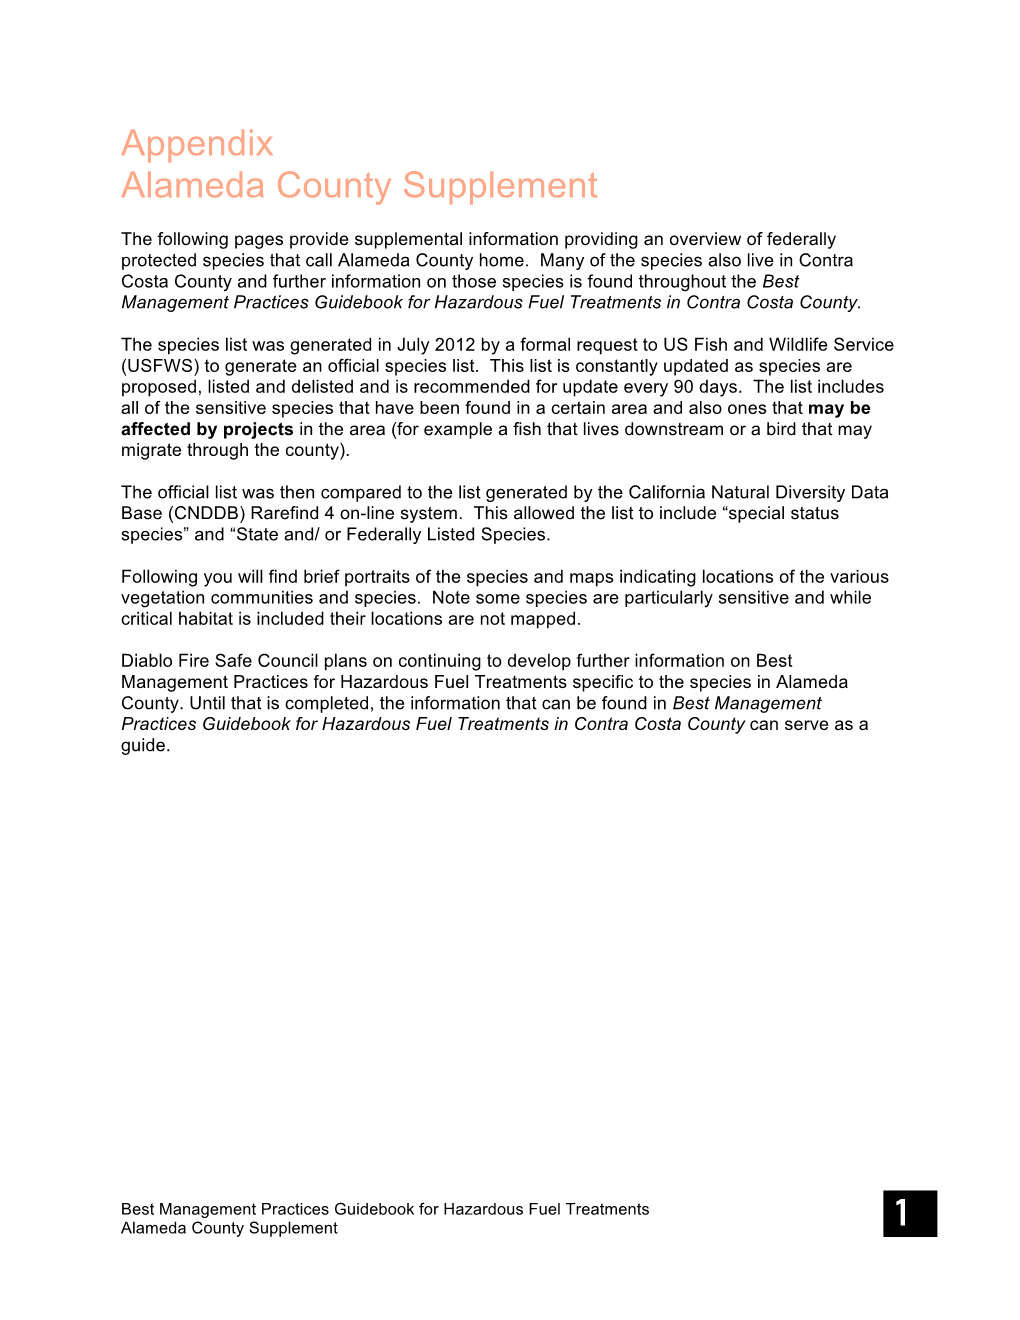 Appendix Alameda County Supplement